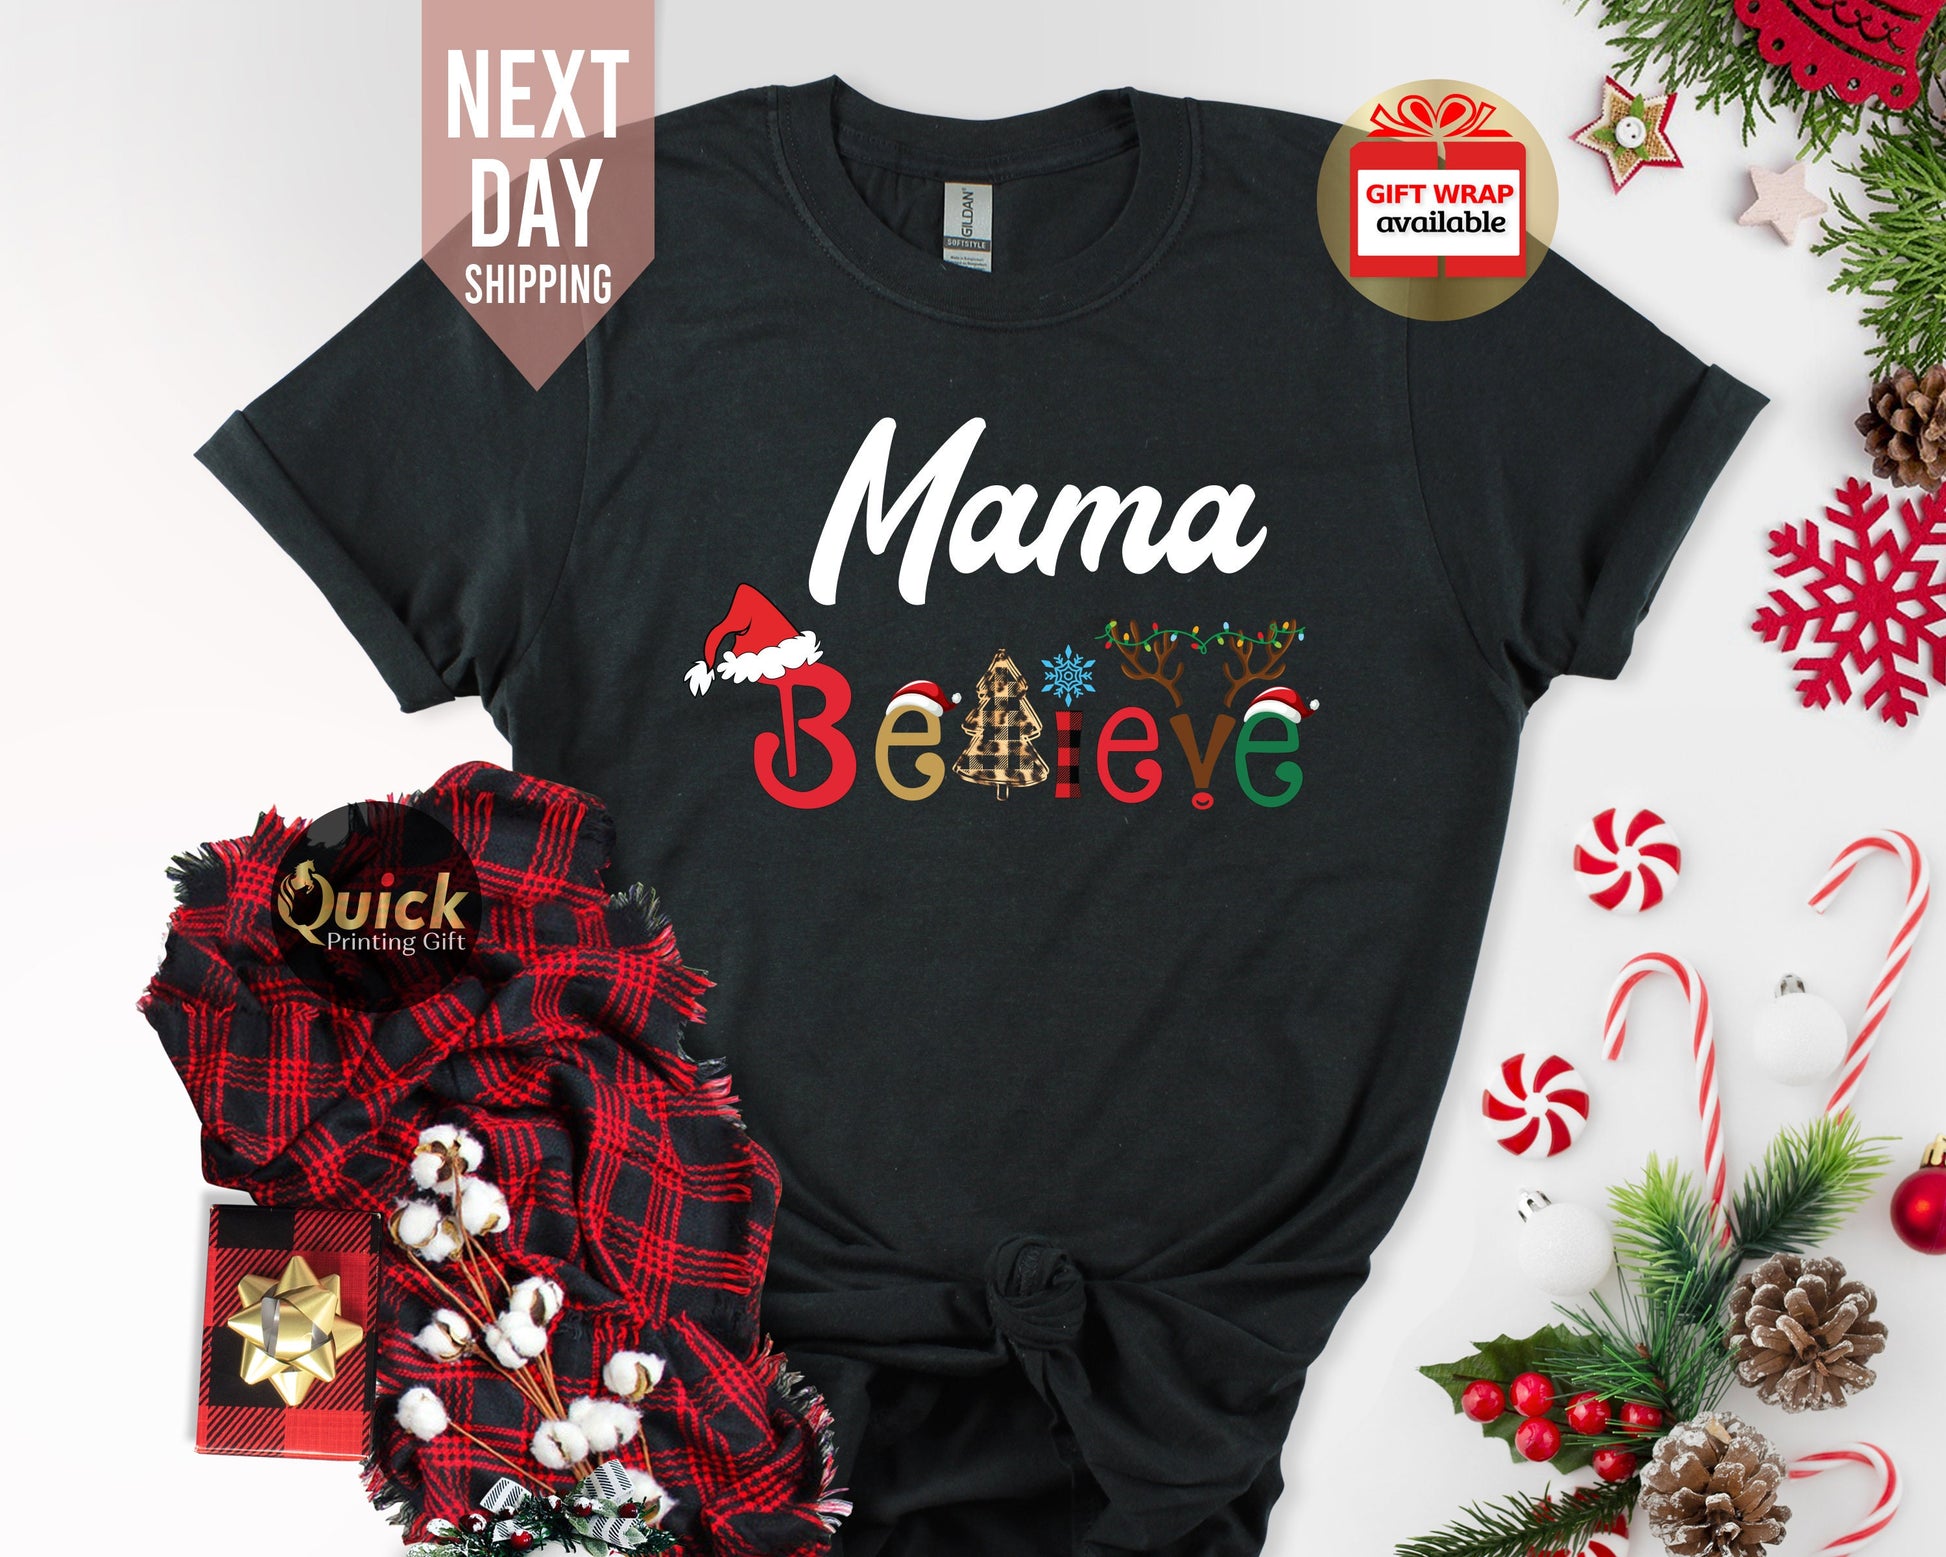 Believe Christmas Shirts